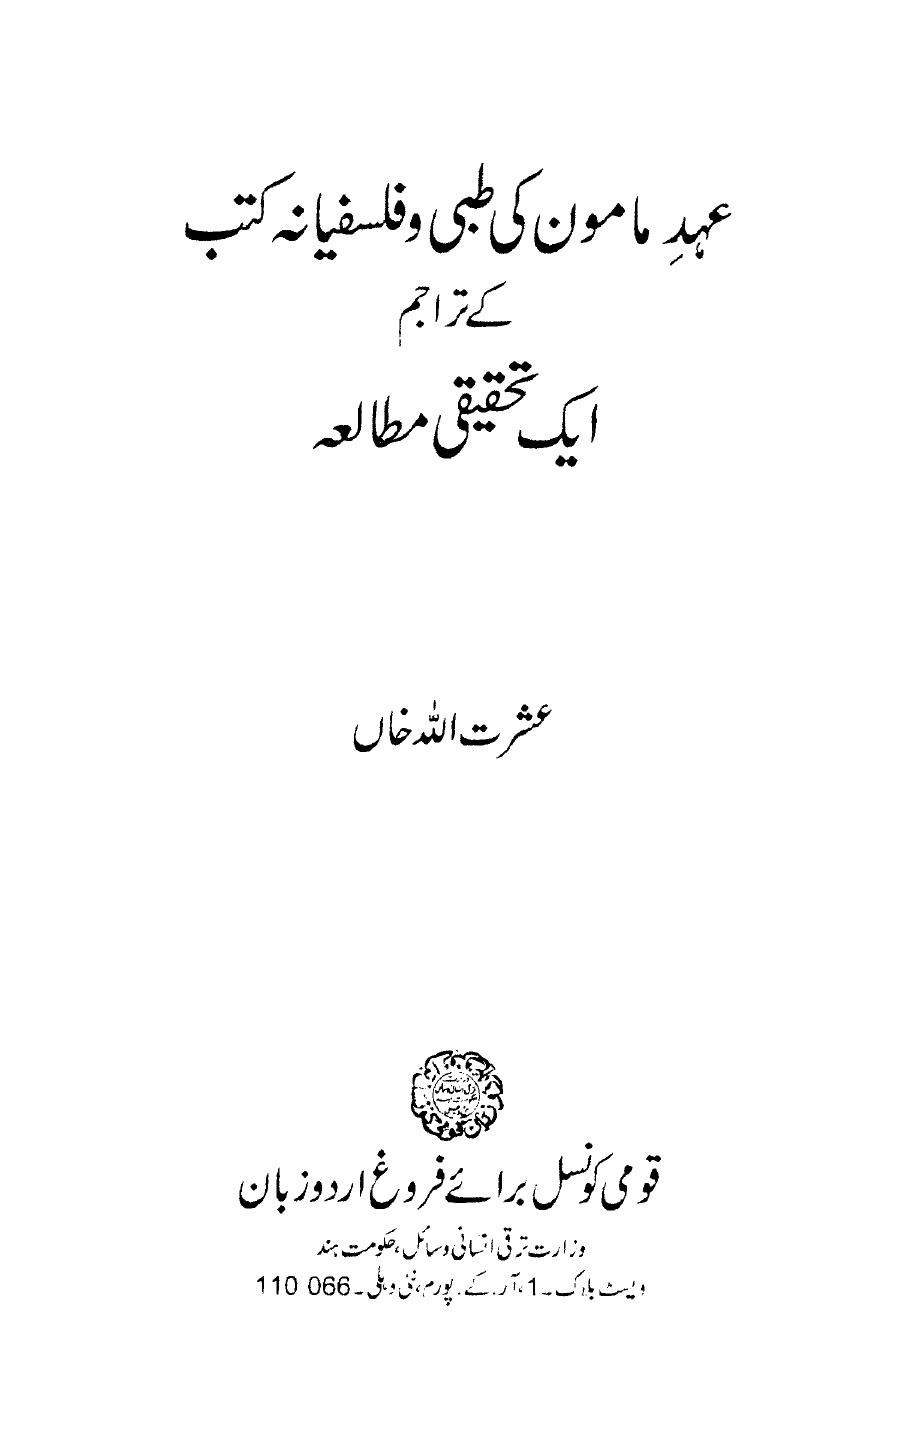 Ahd-e-Mamoon Ke Tibbi -wa- Falsafiyana Kutub Ka Tehqiqi Mutaleah by Ishratullah Khan